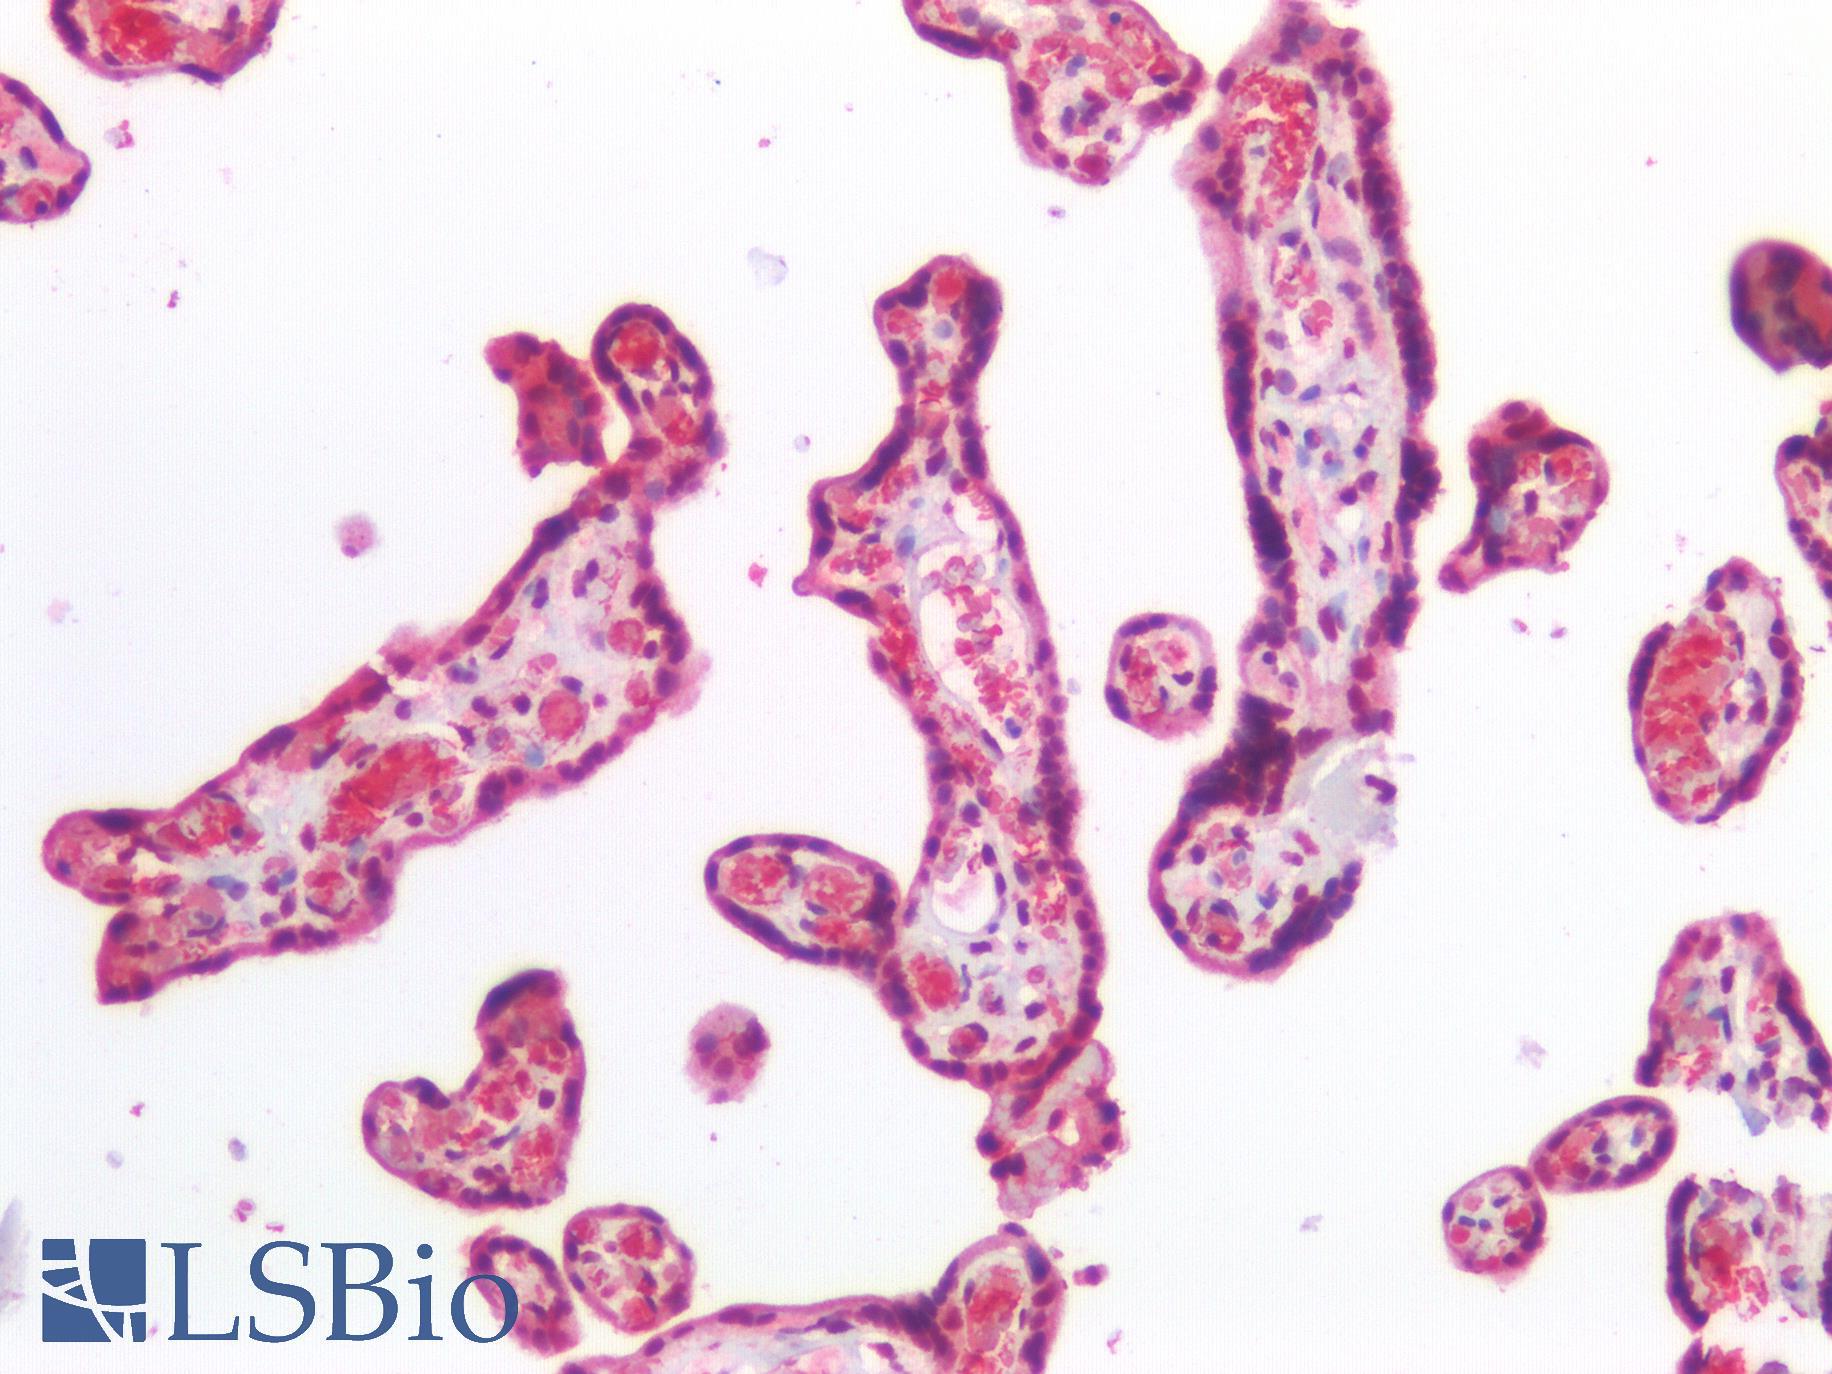 HBA2 / Hemoglobin Alpha 2 Antibody - Human Placenta: Formalin-Fixed, Paraffin-Embedded (FFPE)